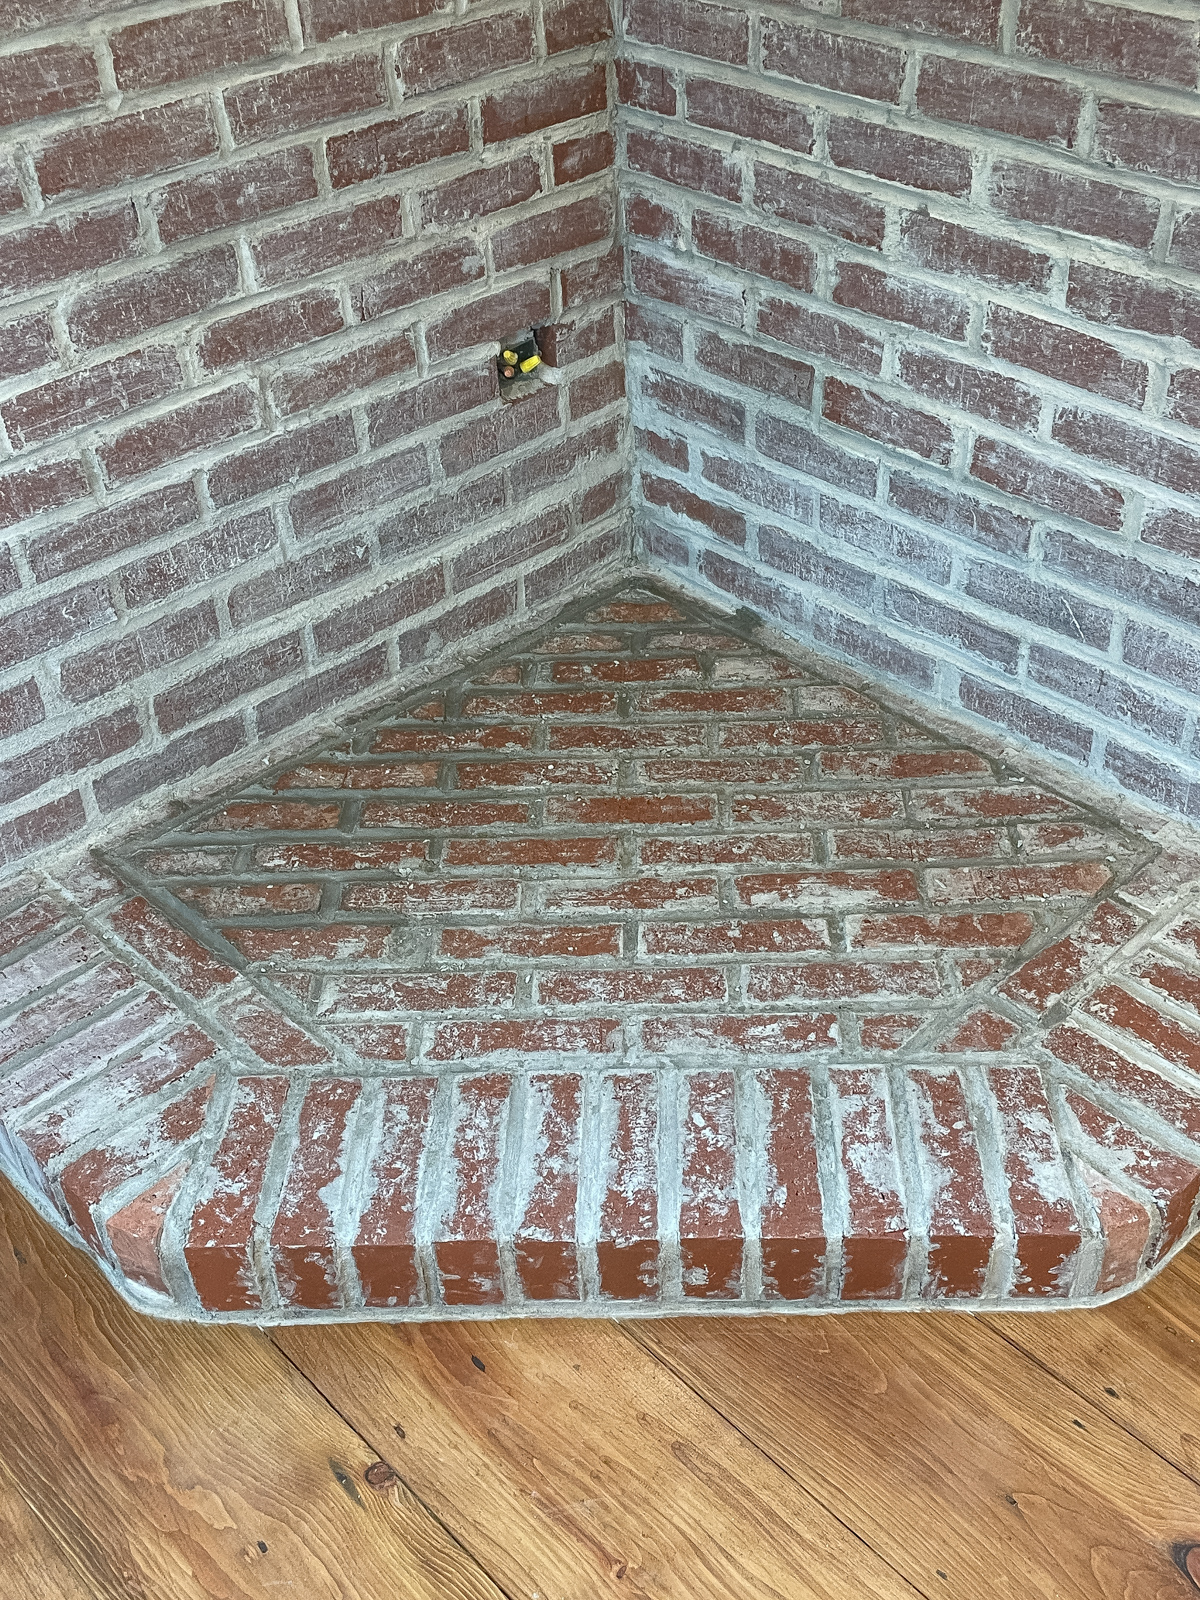 DIY Corner brick fireplace hearth